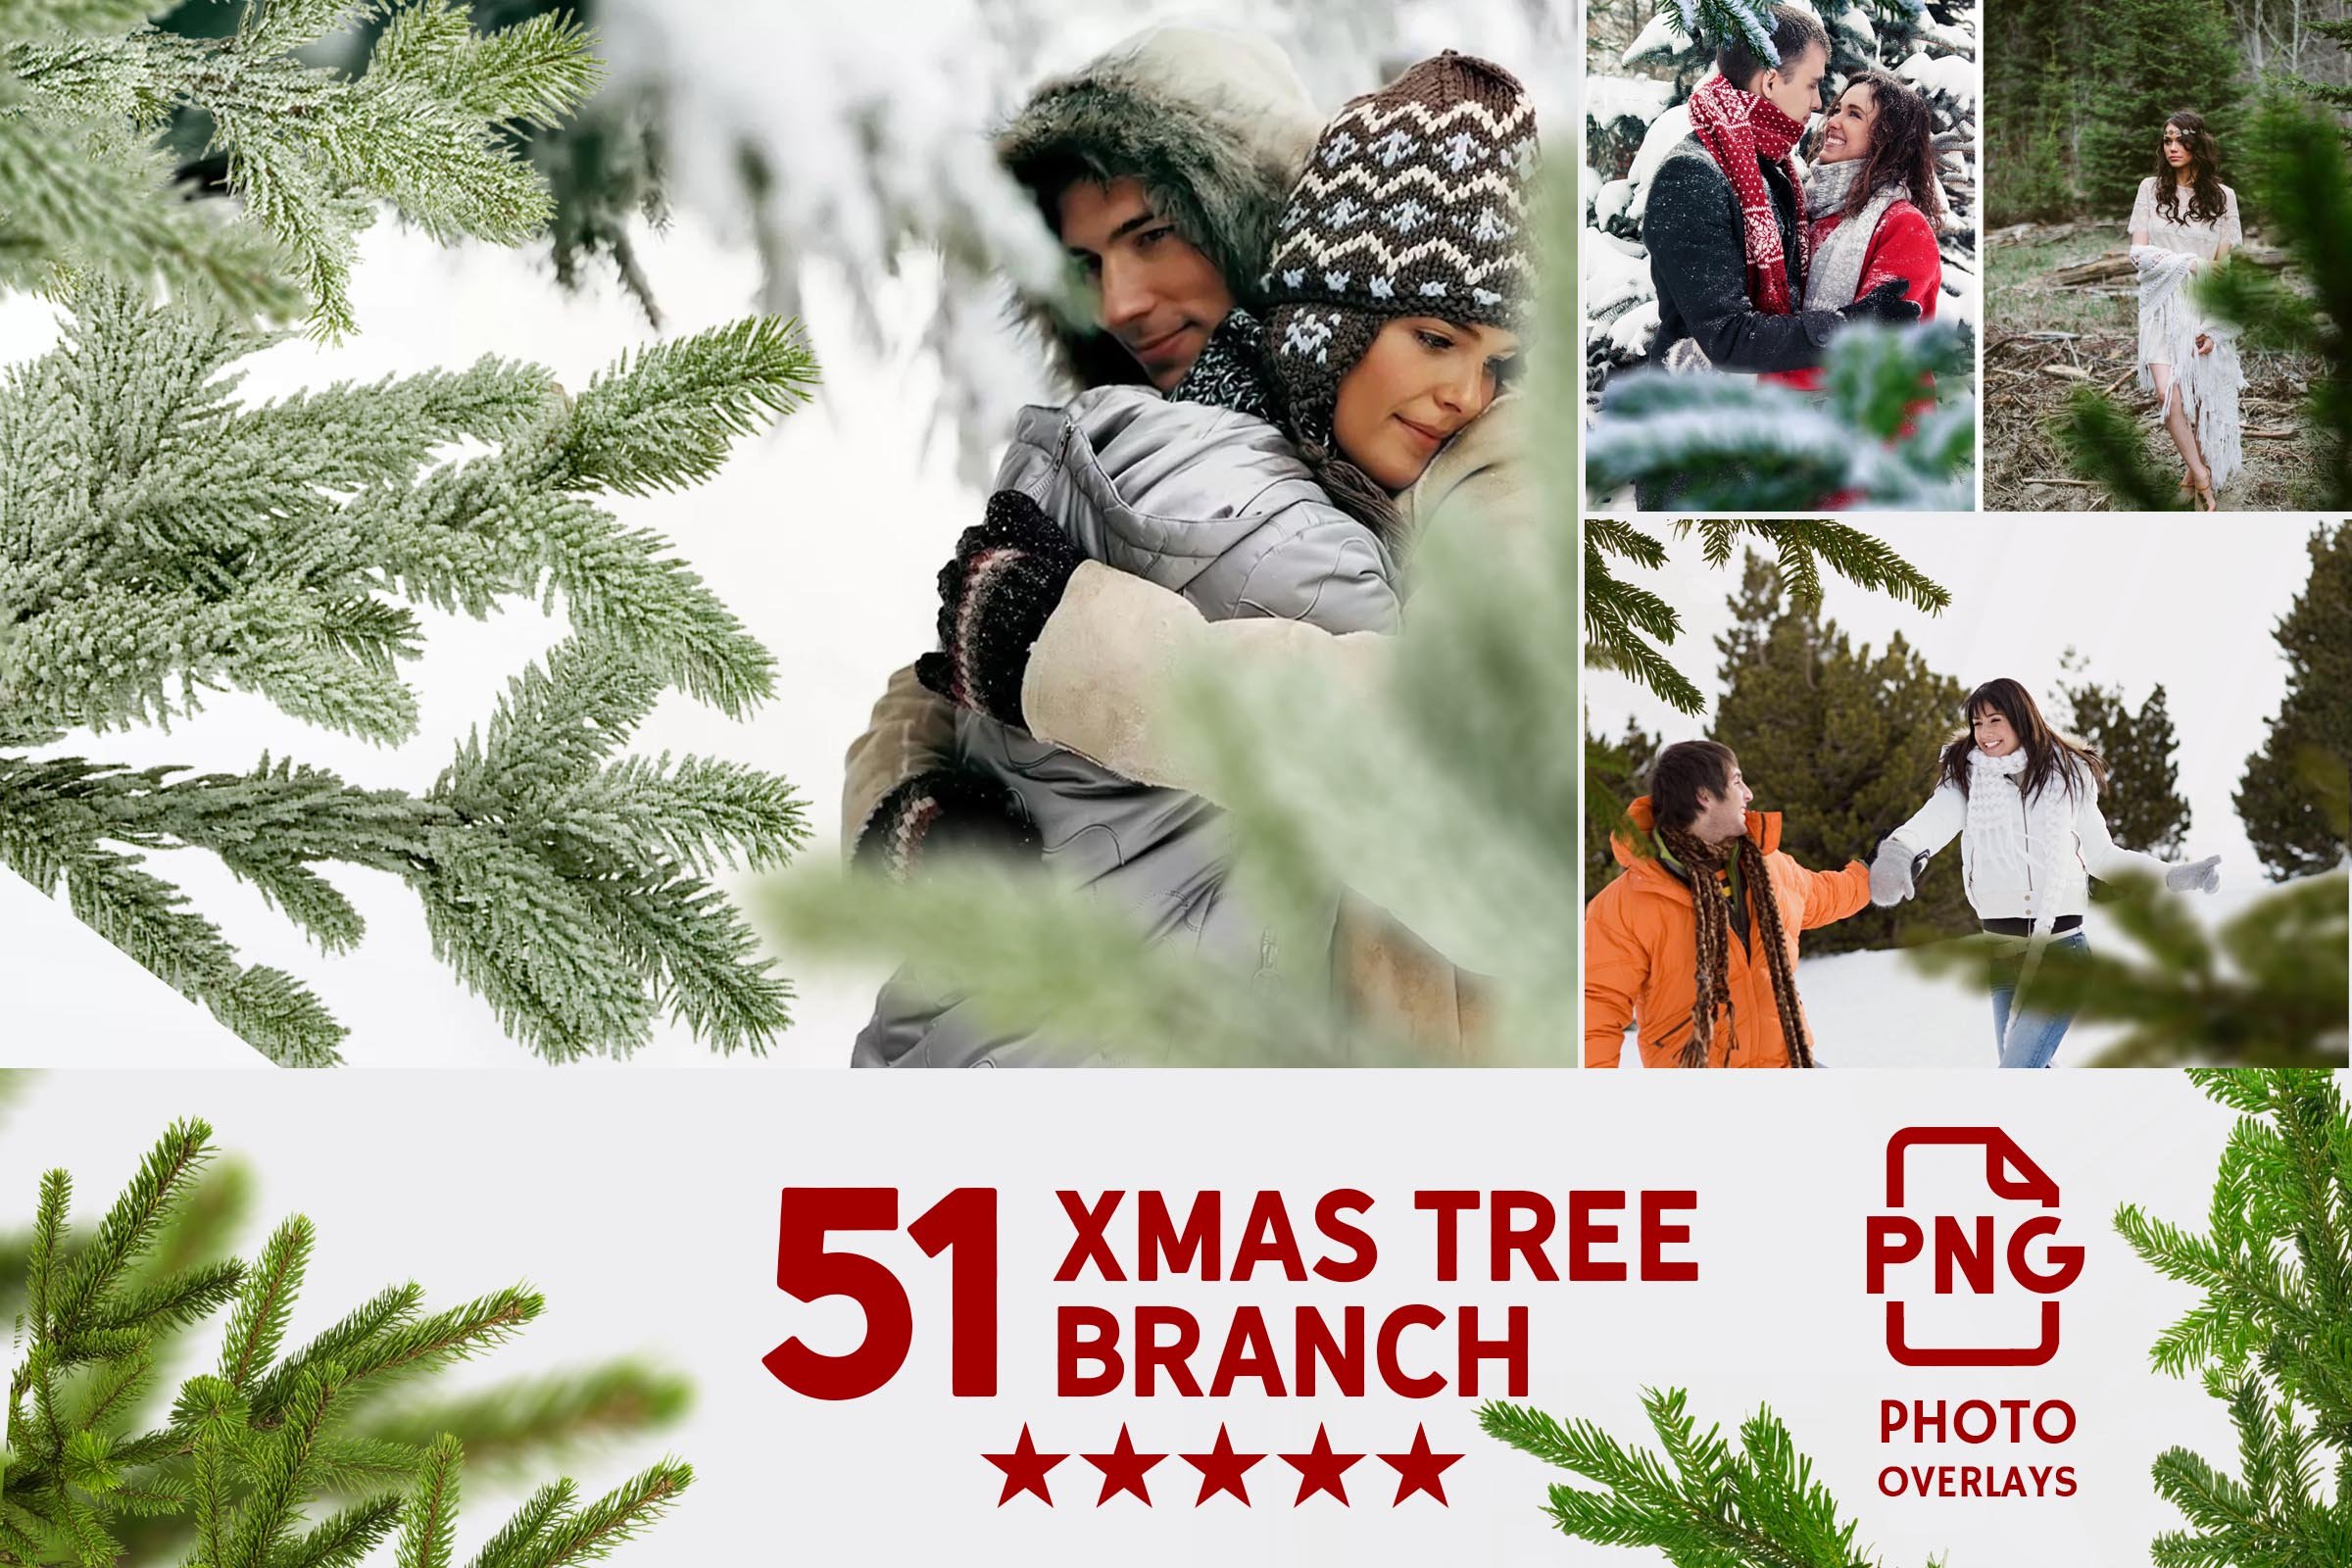 020 pro. 51 christmas tree branch overlays 73